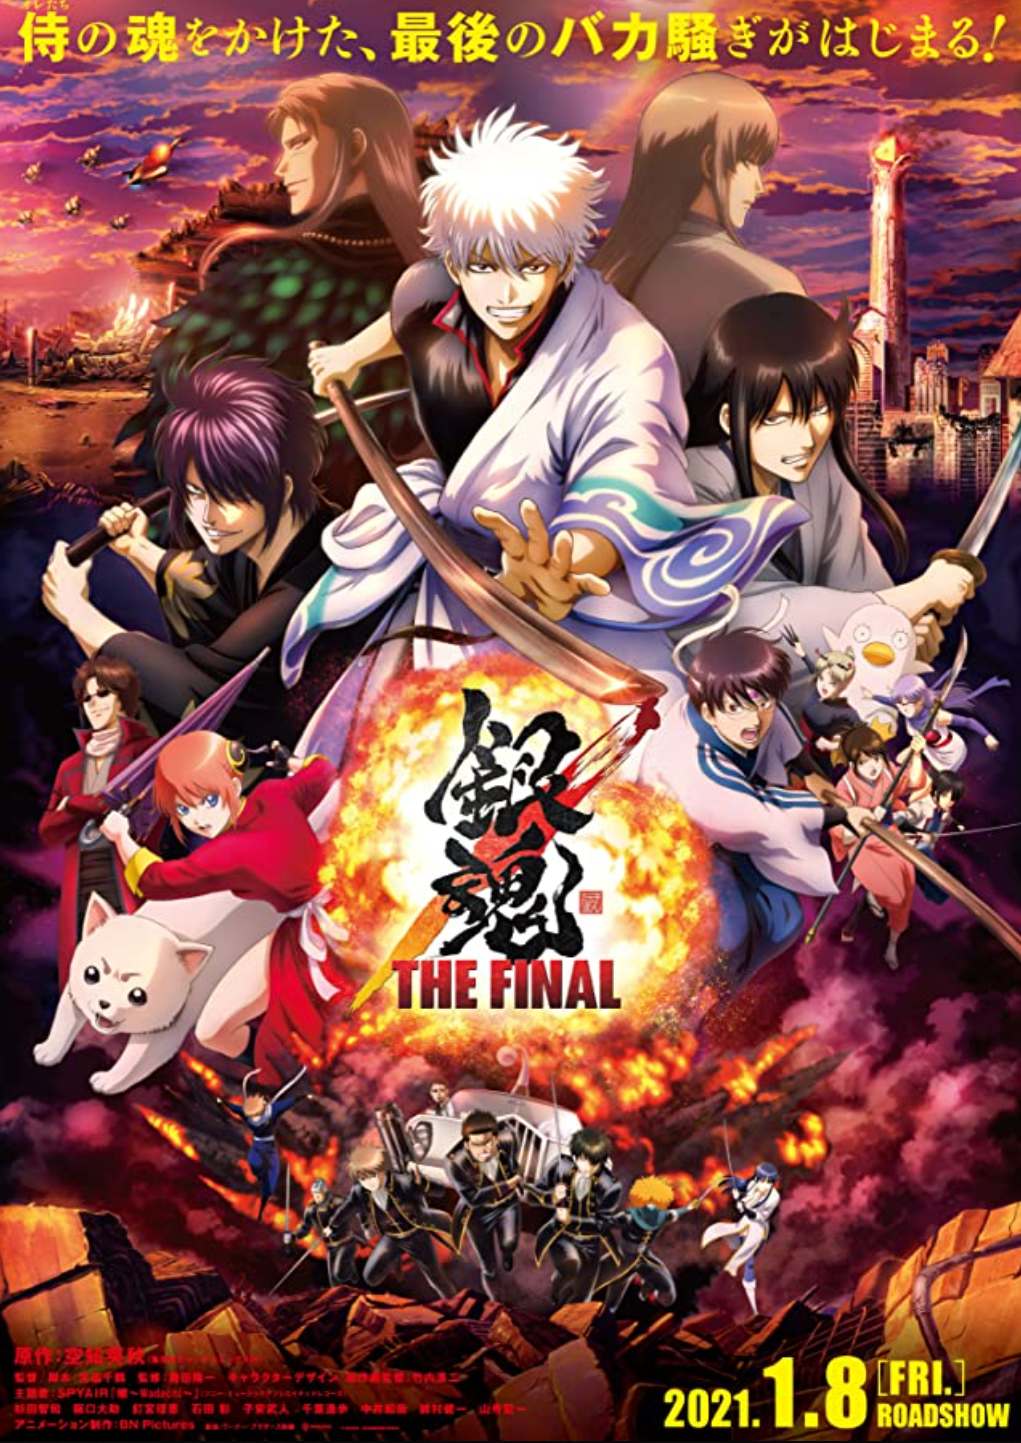 New Anime Movies 2021 1 - gintama the final